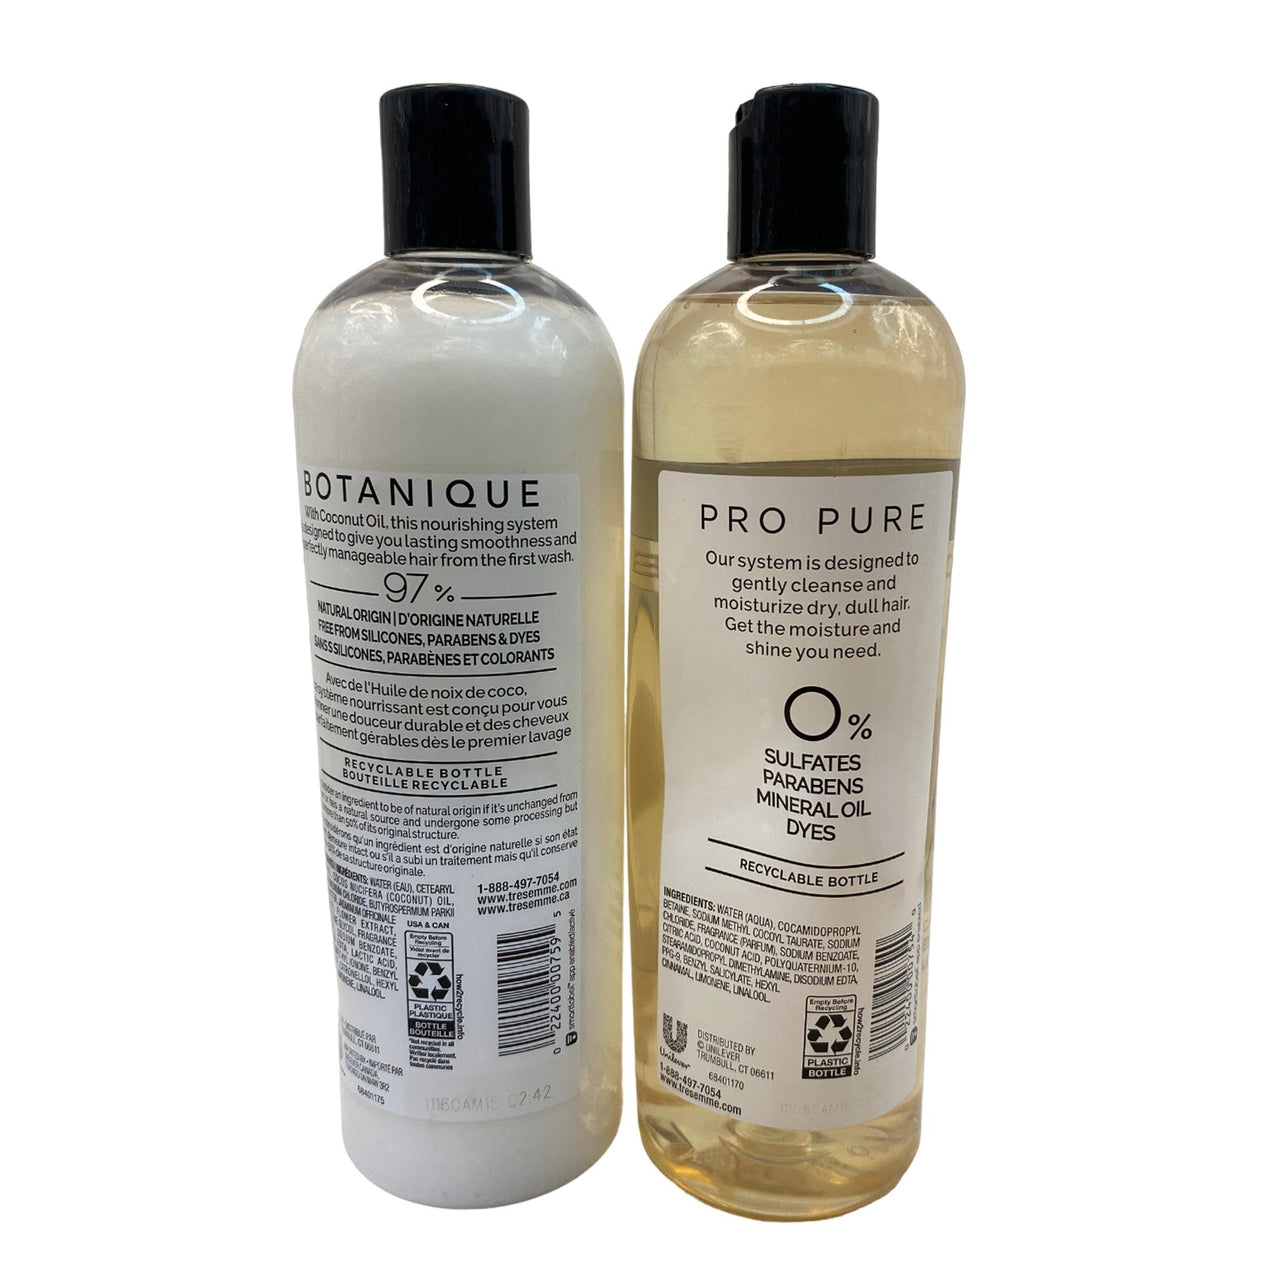 Tresemme Shampoo and Conditioner Mix (50 Pcs Box) - Discount Wholesalers Inc